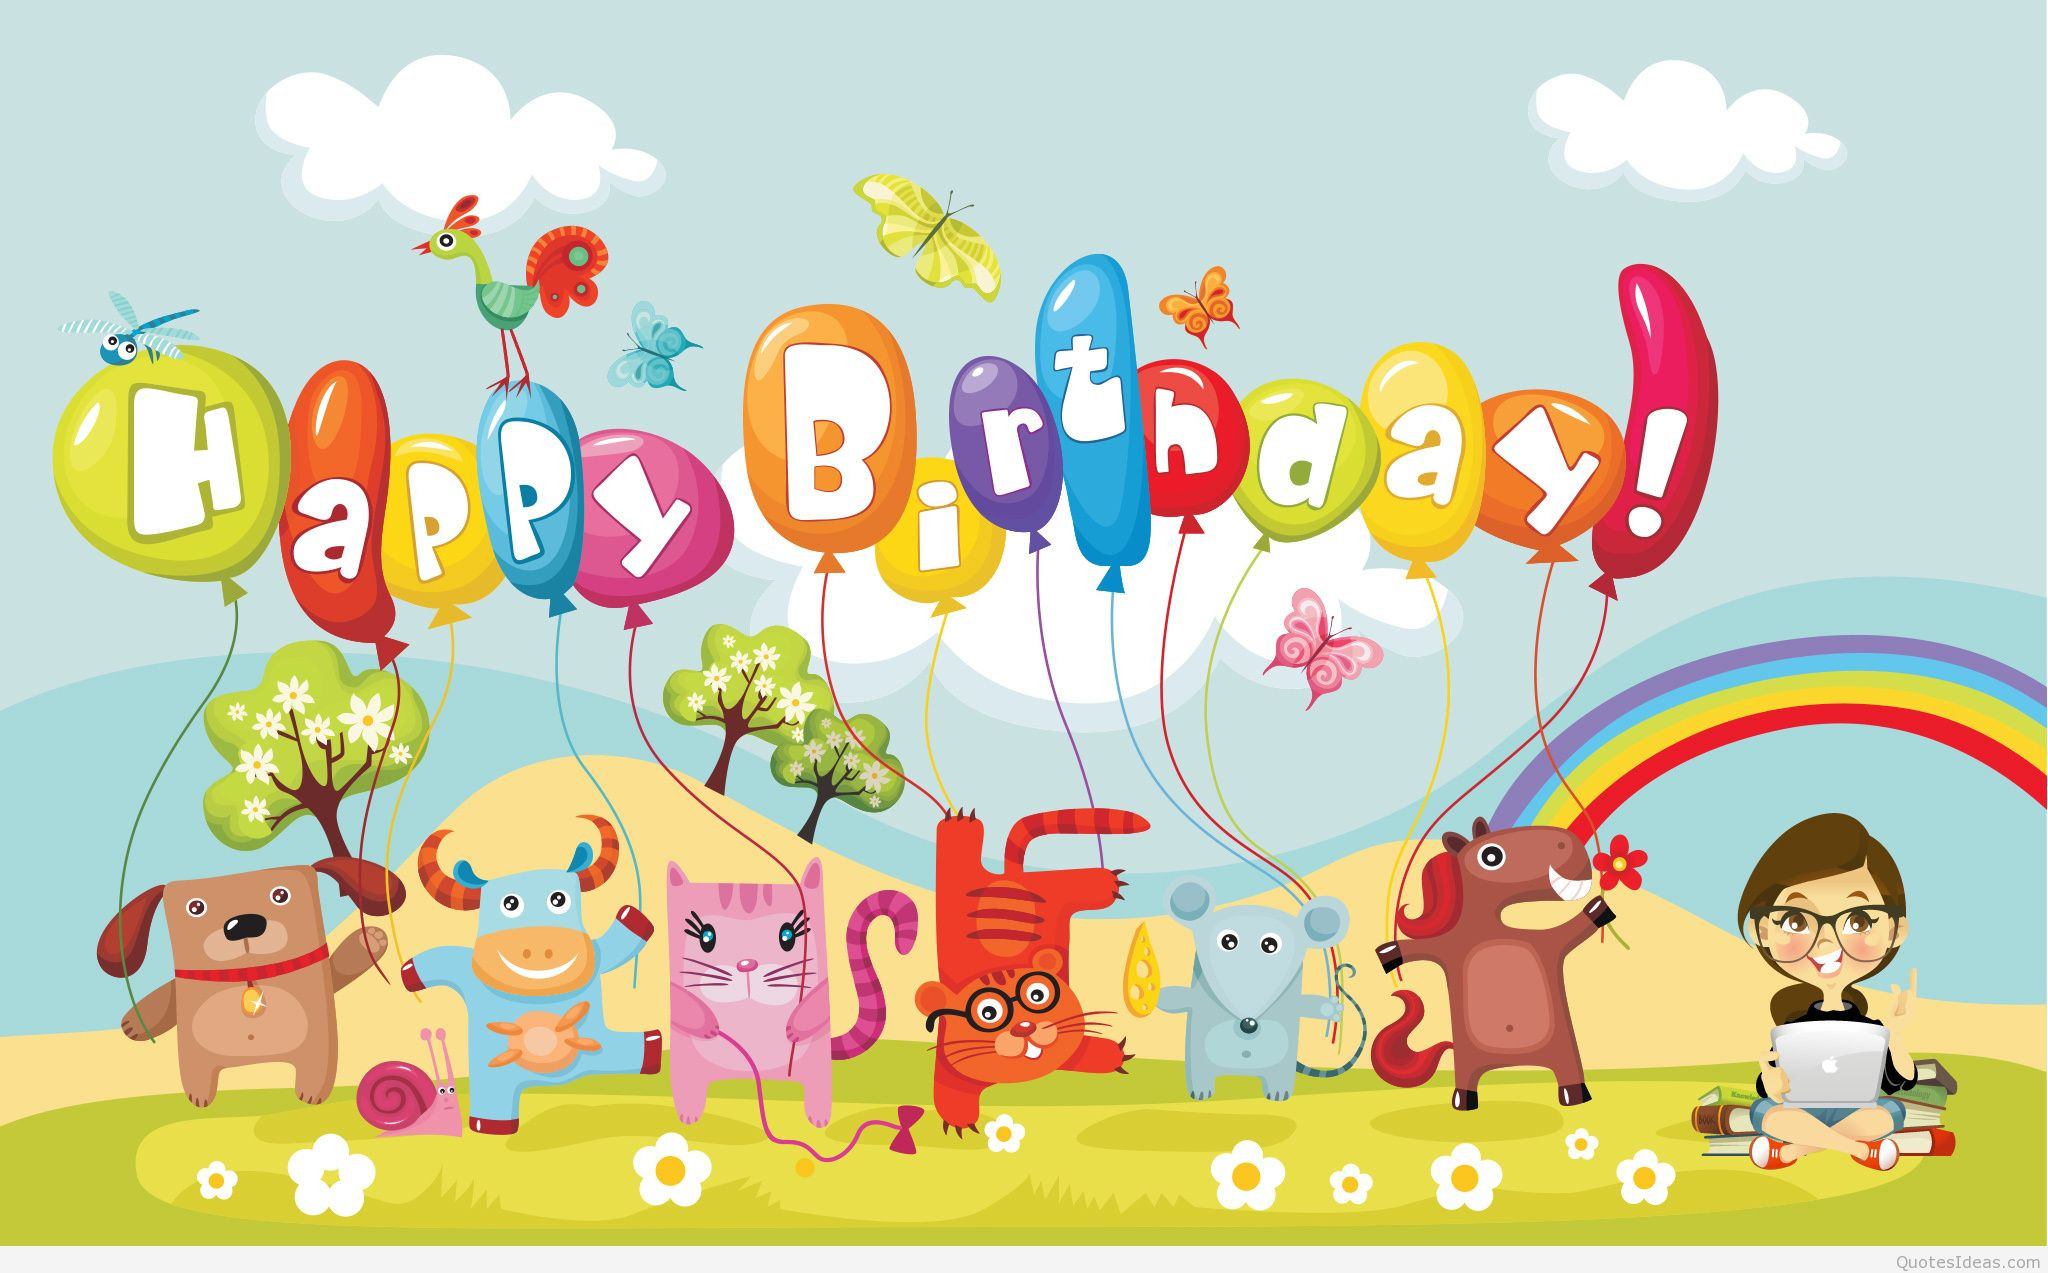 Best ideas about Happy Birthday Funny Cartoon
. Save or Pin Funny cartoon Happy Birthday quote Now.